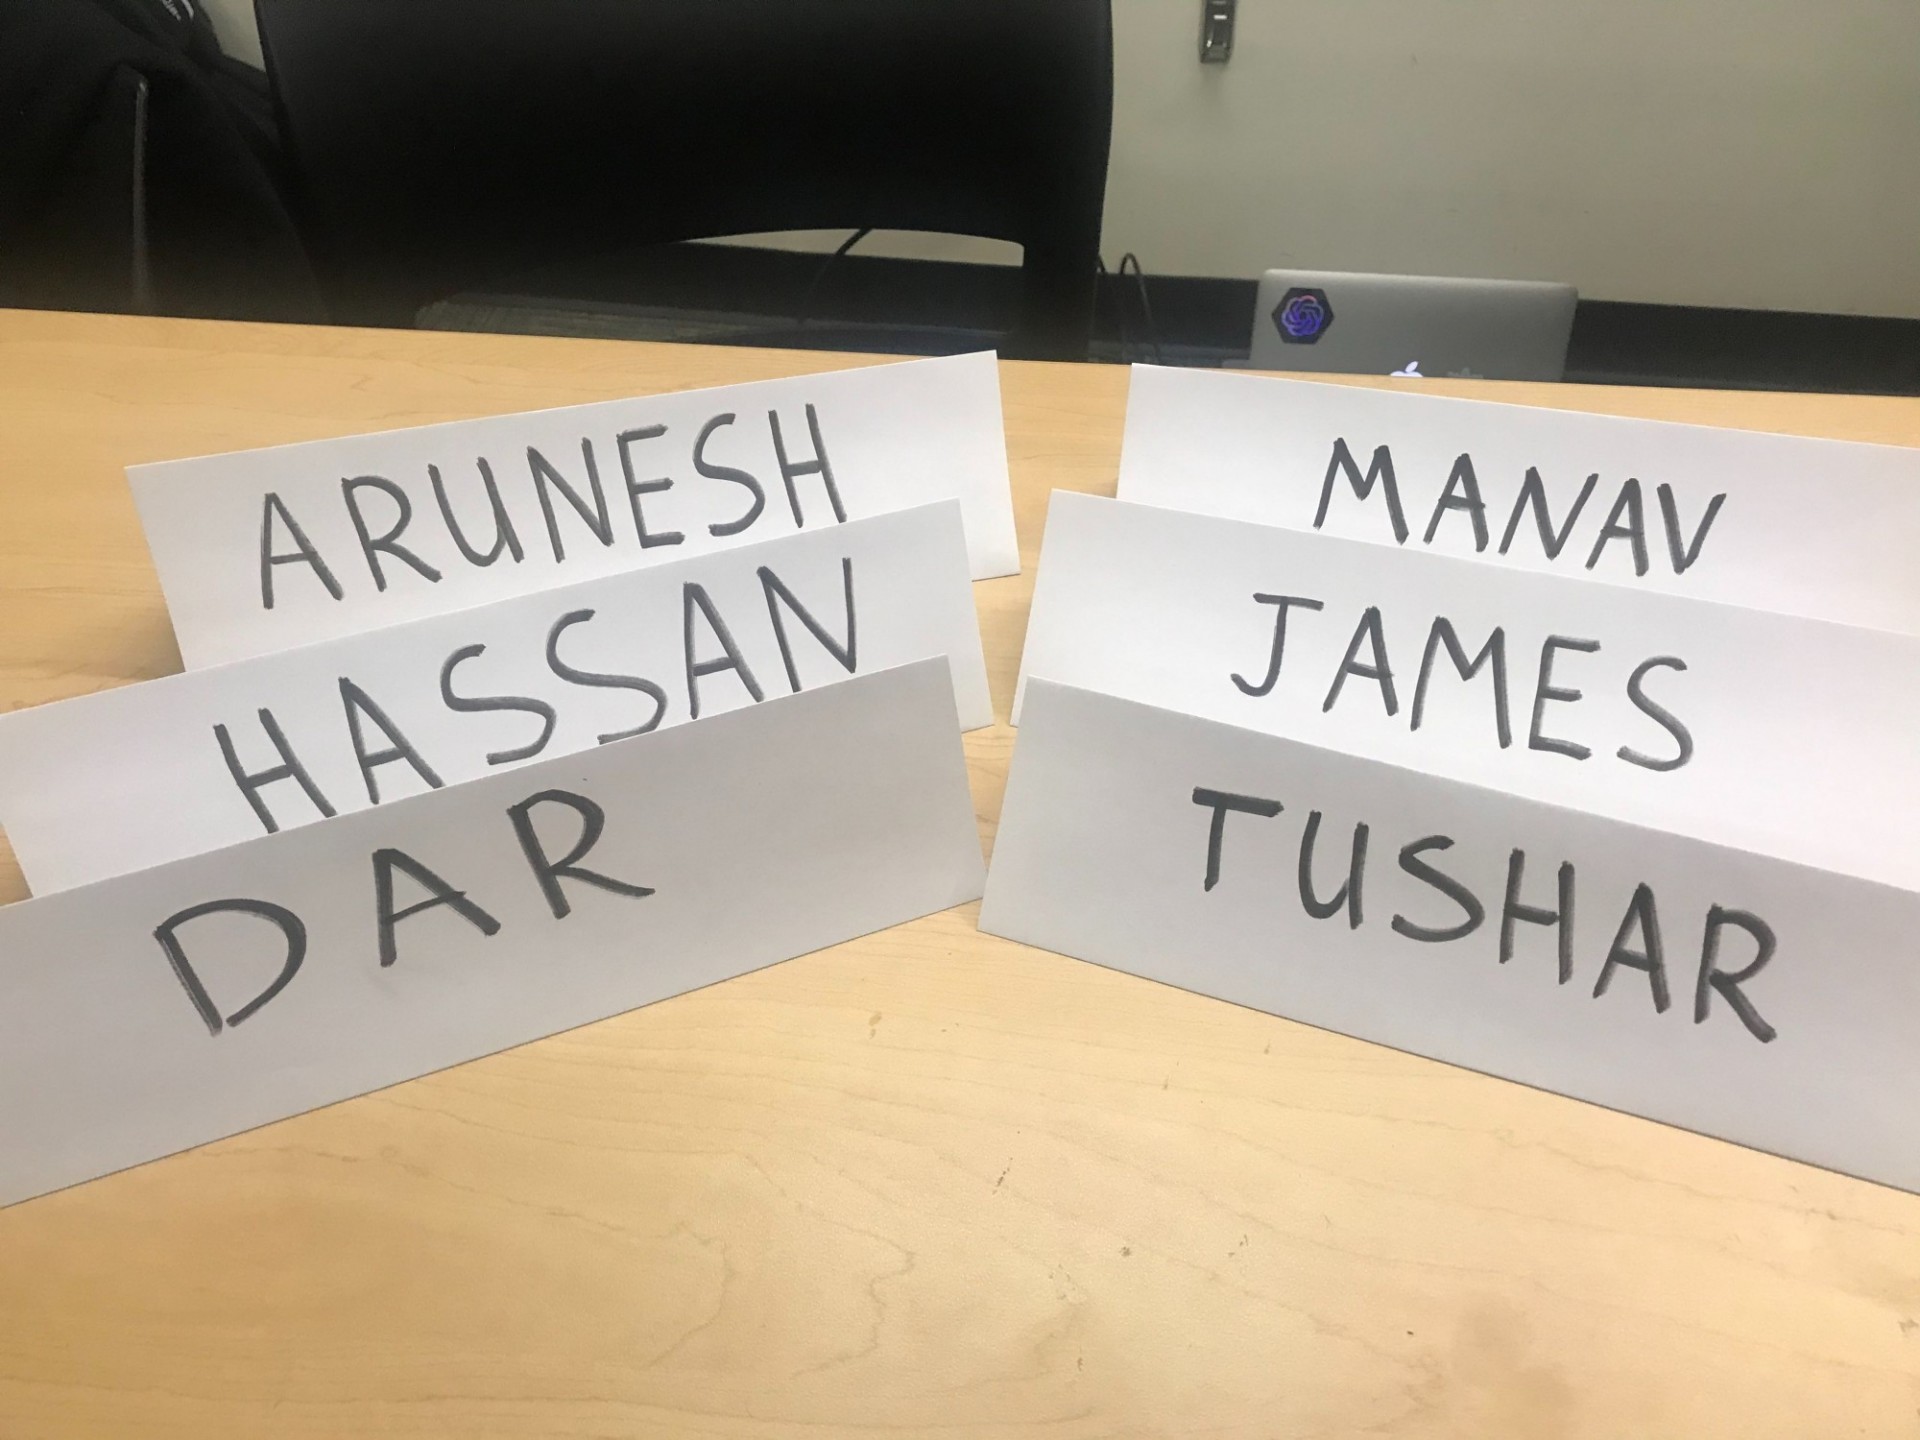 Student Internship panelist name tags